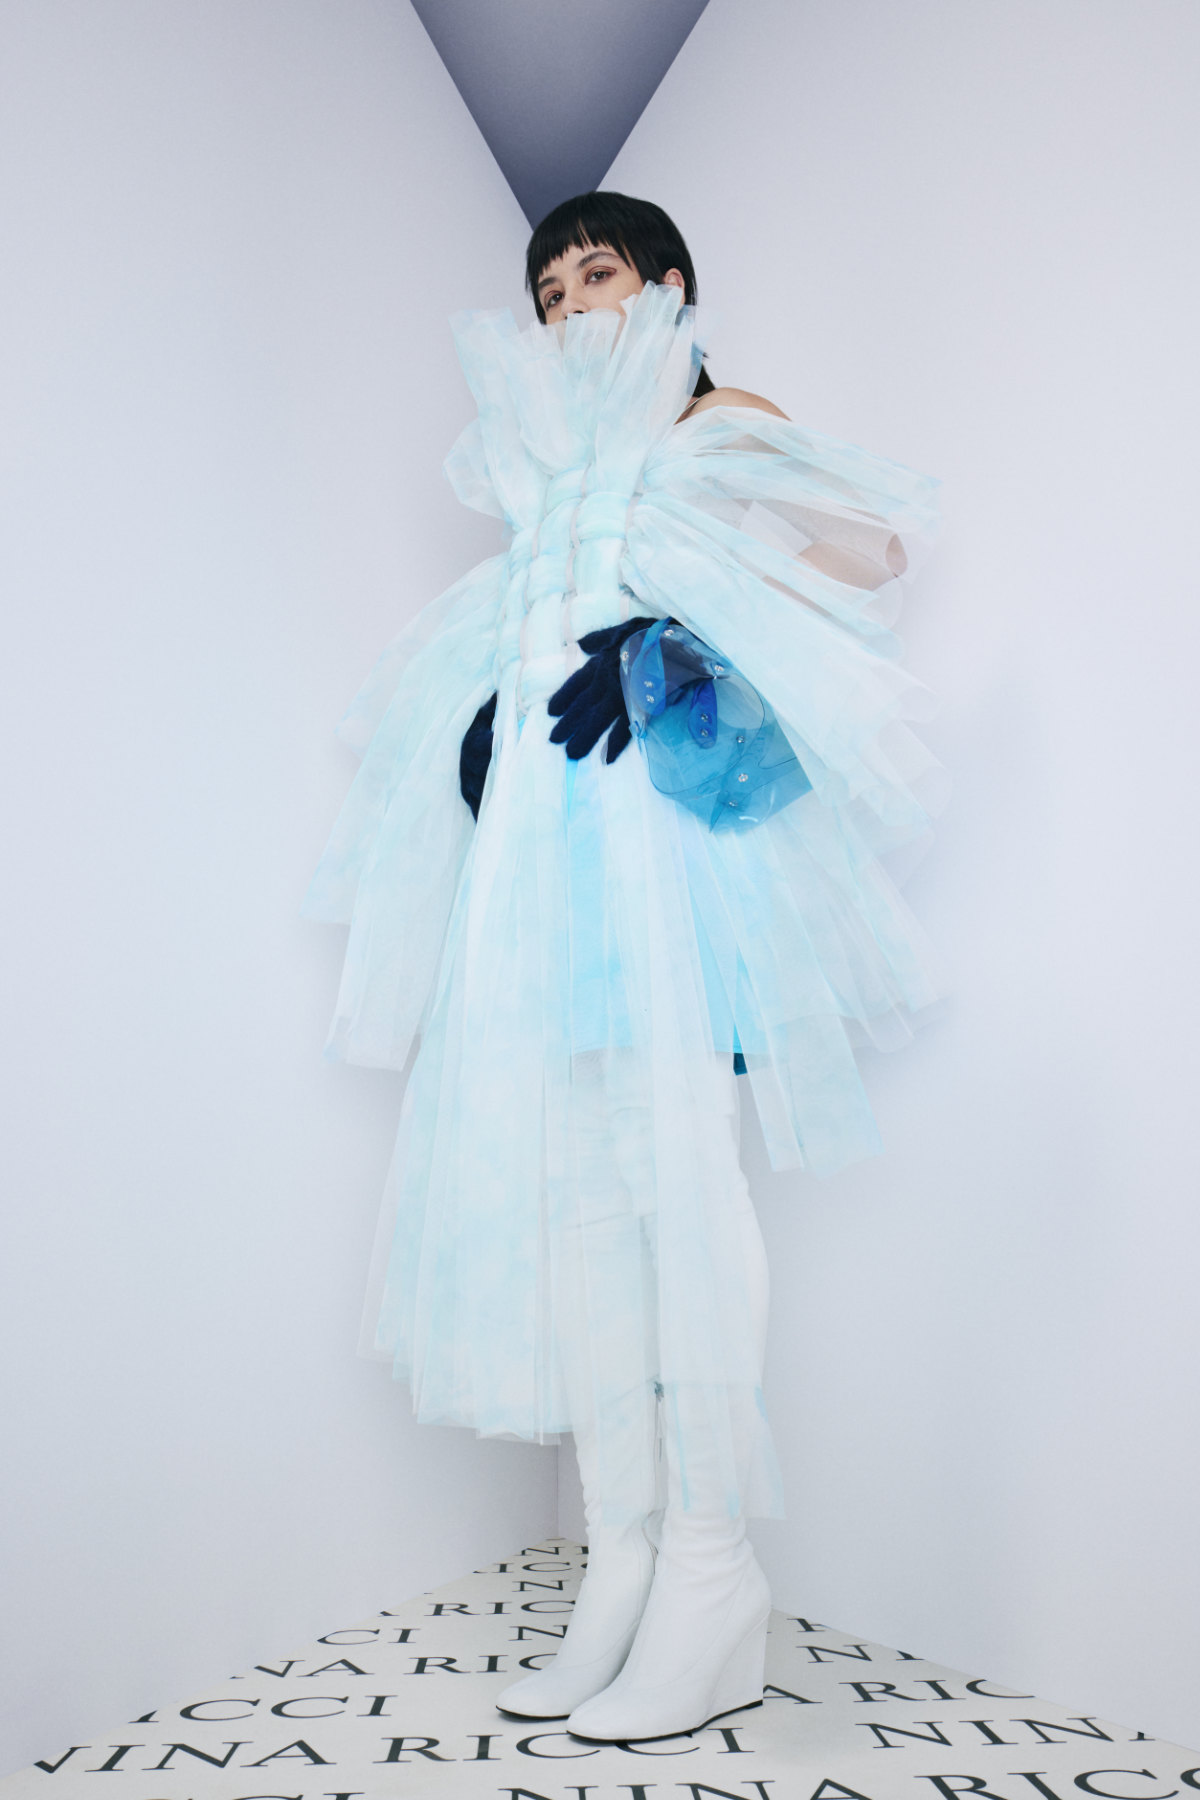 Nina Ricci Presents Its New Fall Winter 22-23 Collection